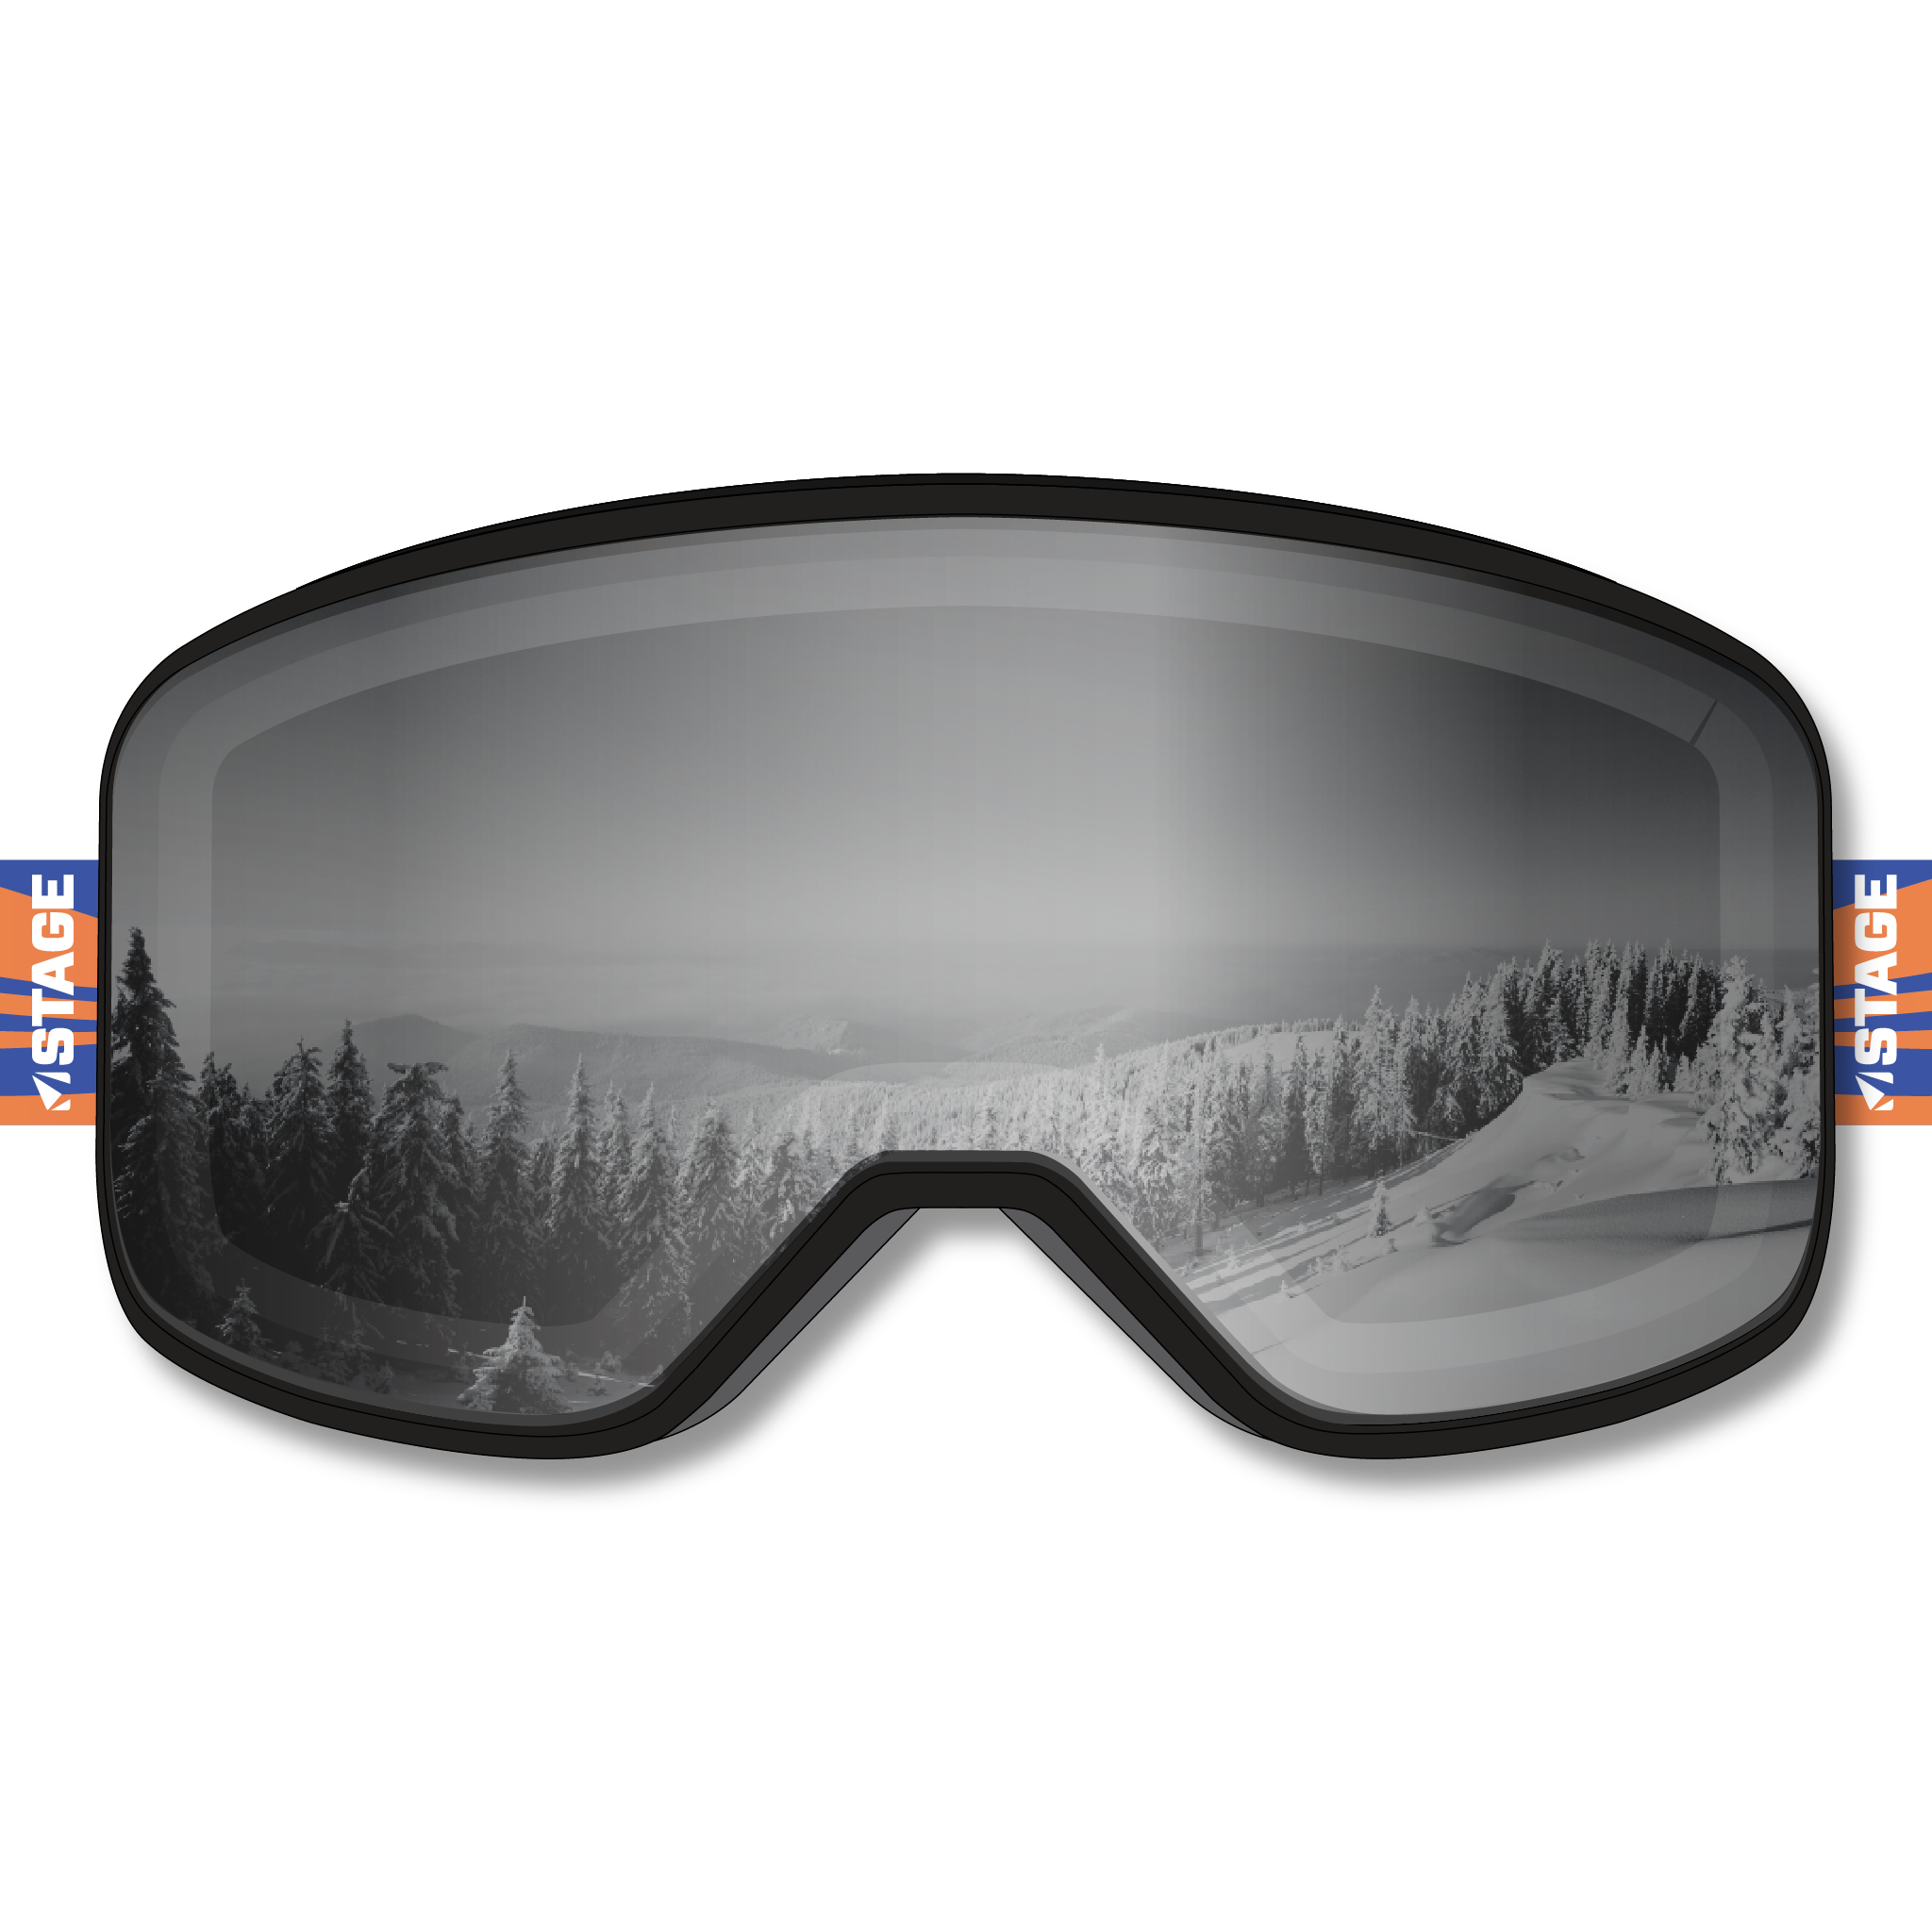 Challenged Athletes of West Virginia Prop Ski Goggle - Mirror Chrome Smoke Lens